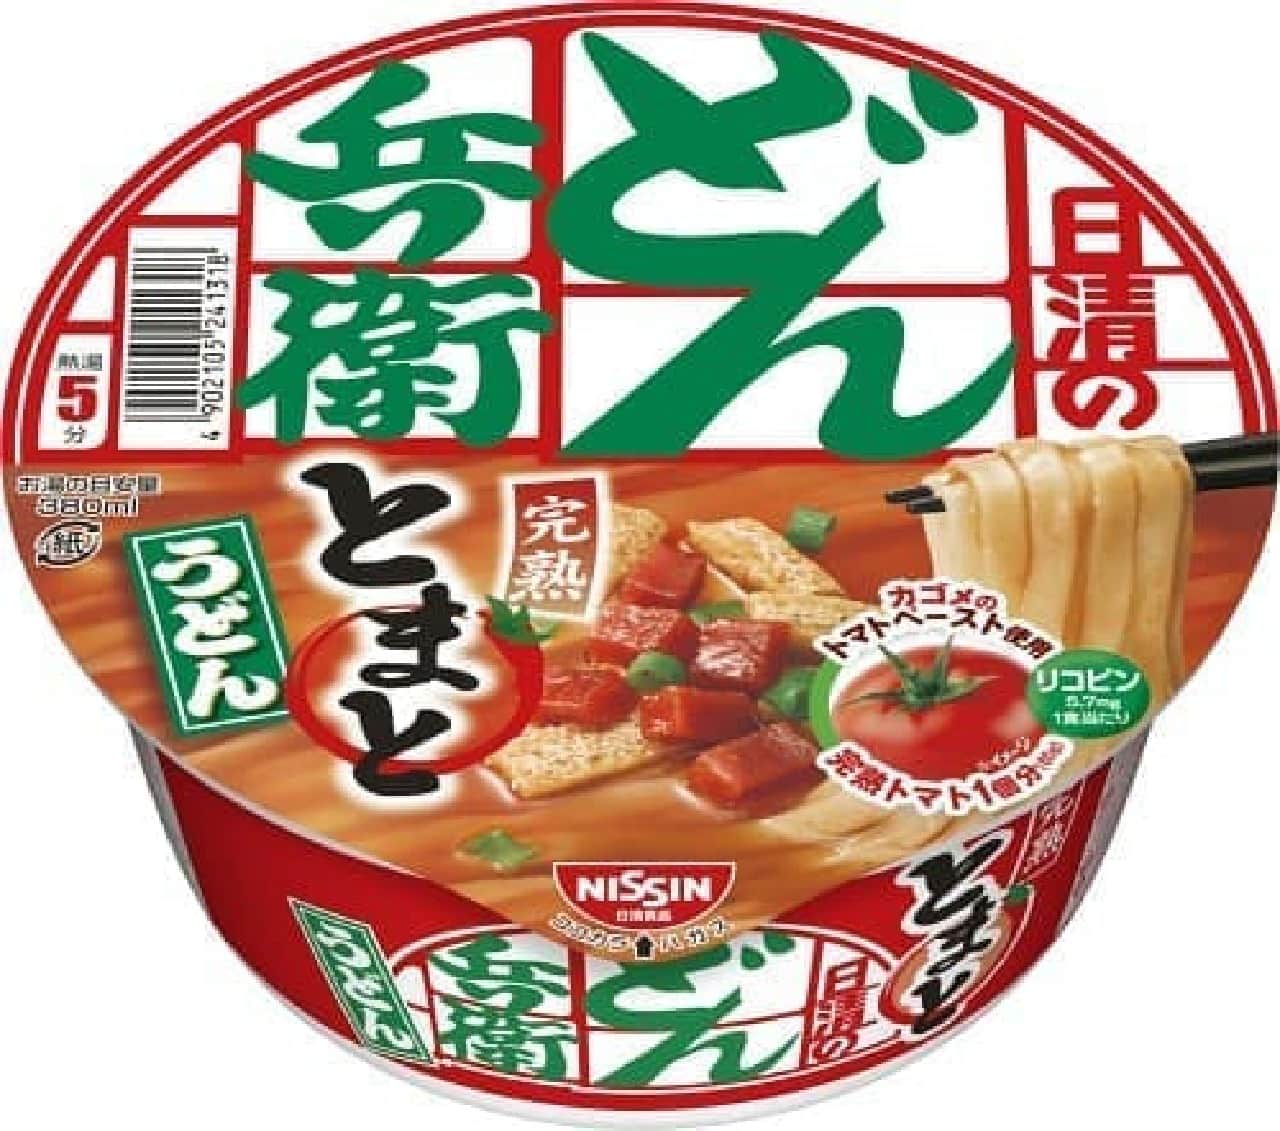 Nissin Donbei Ripe Tomato Udon